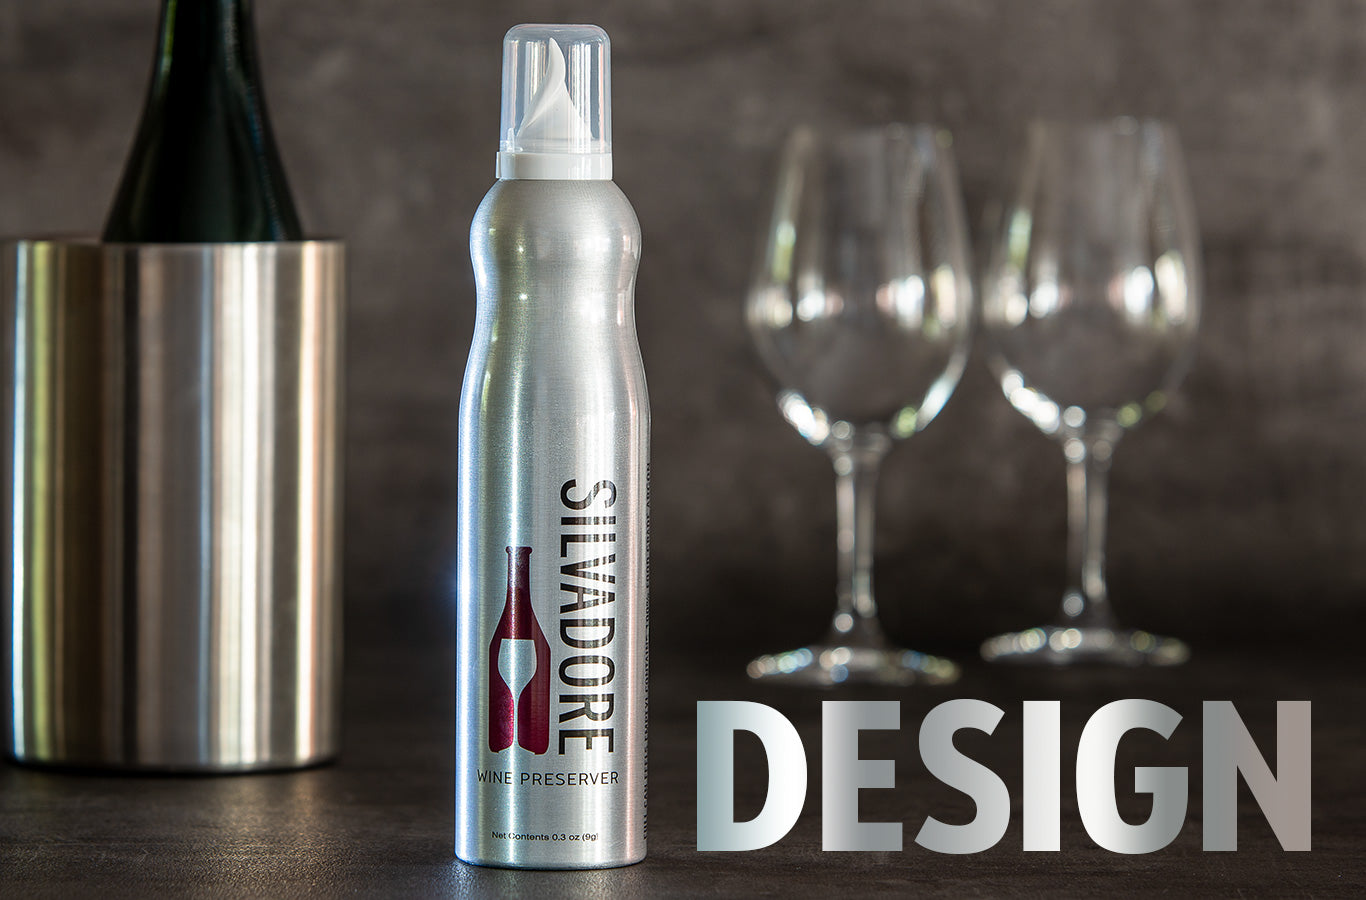 Silvadore Wine Preserver Wins Design Award Recognition!